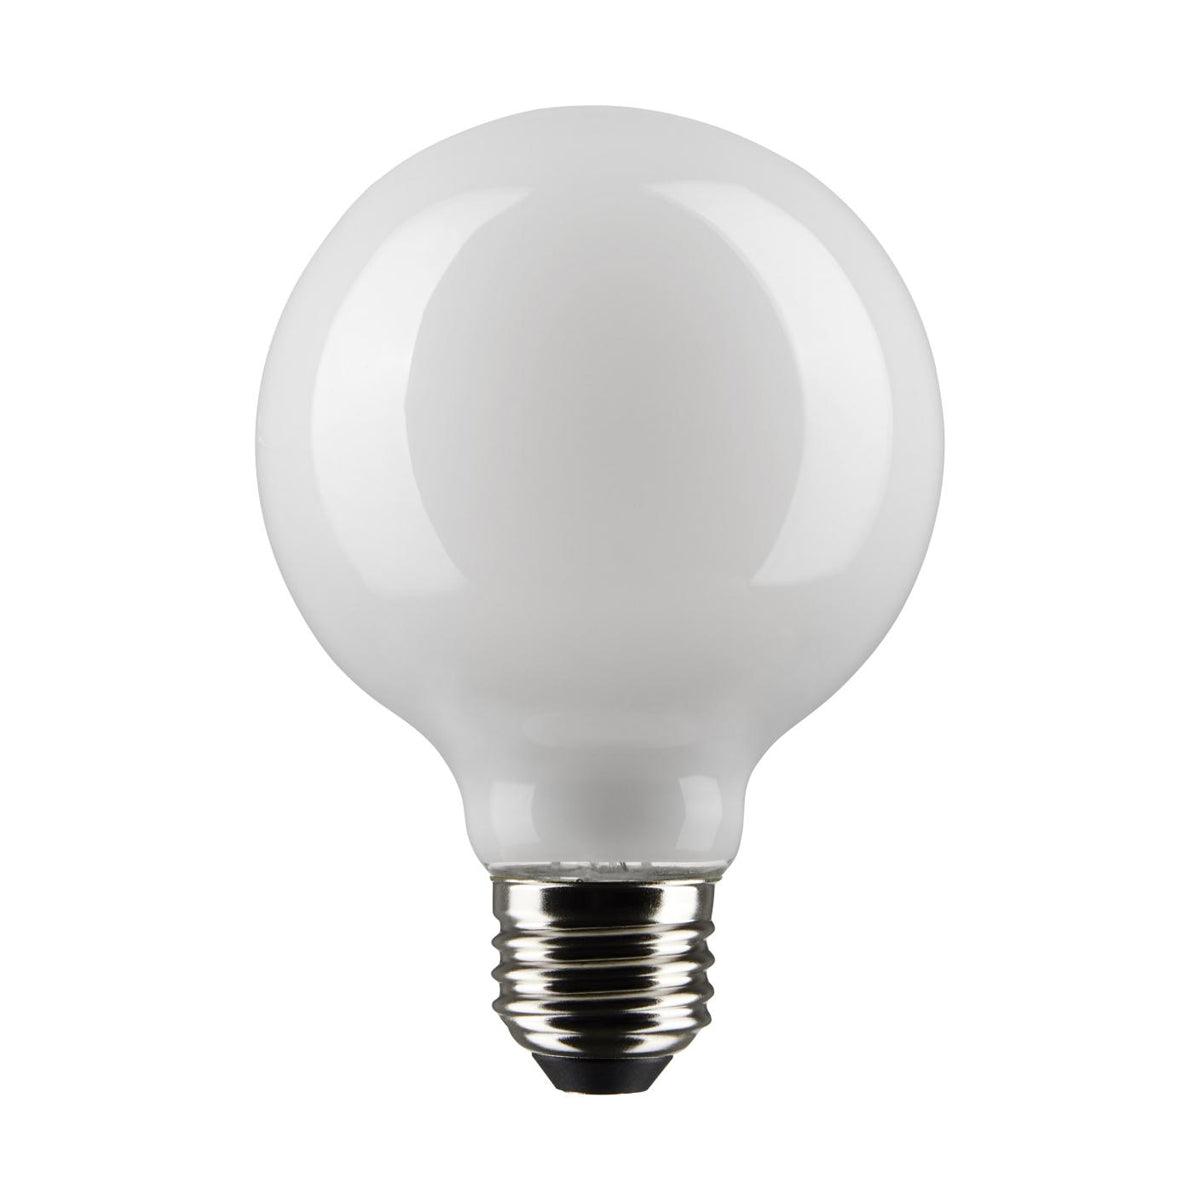 G25 LED Globe Bulb, 6 Watt, 500 Lumens, 5000K, E26 Medium Base, Frosted Finish